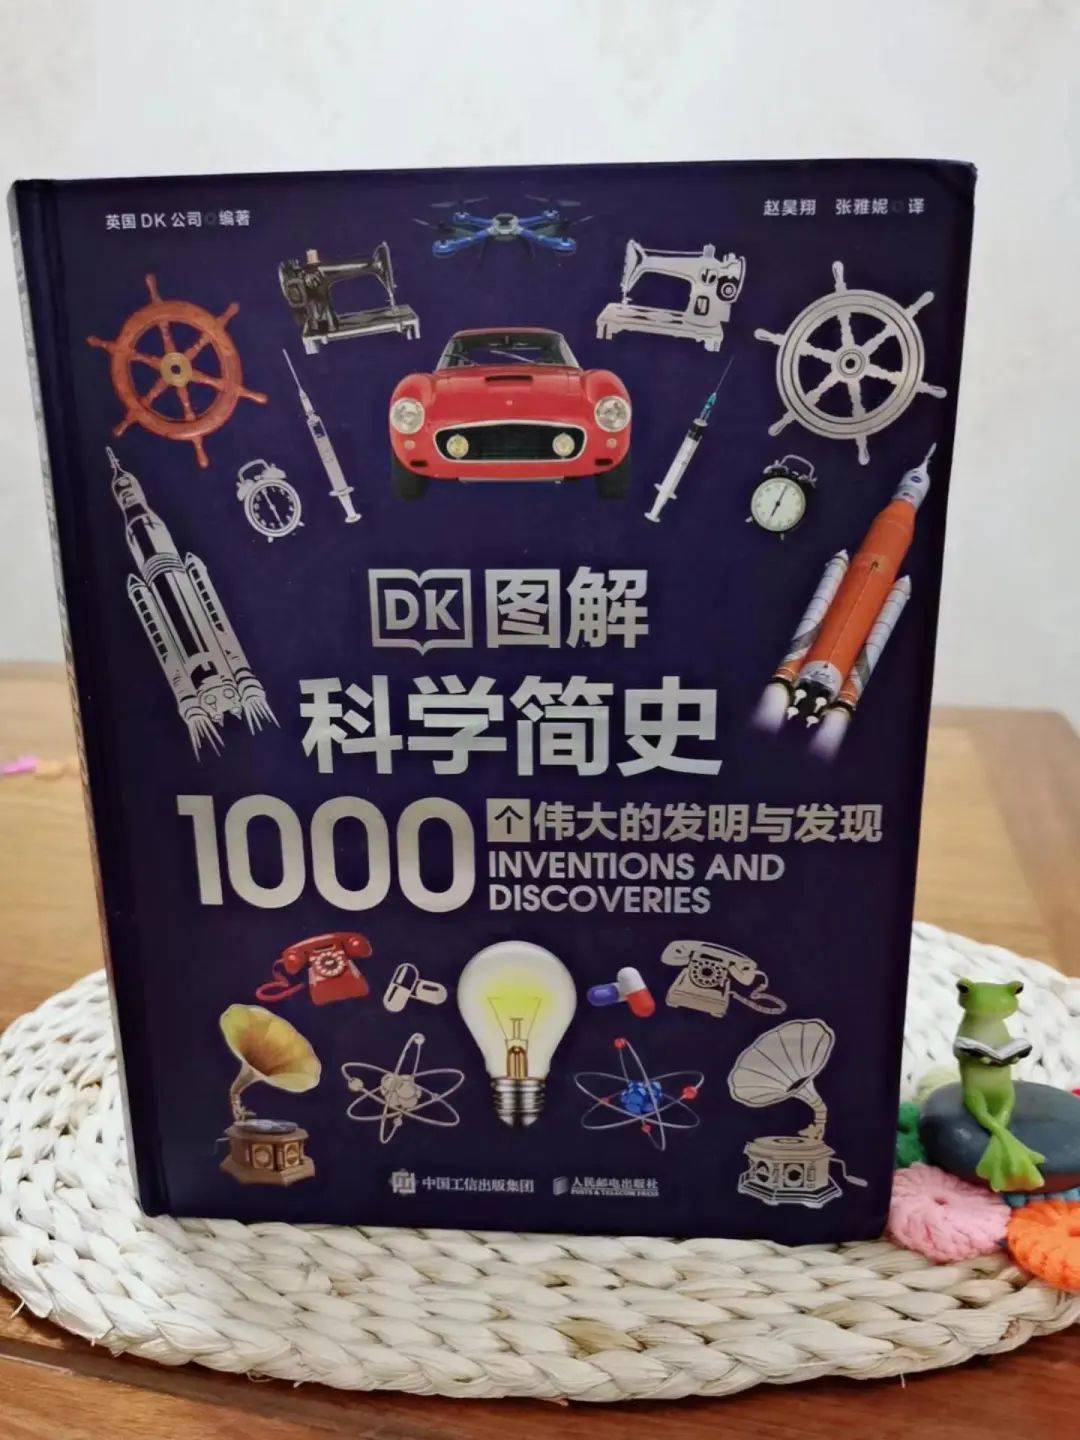 picsart苹果中文版:这1000个奇趣发明+理科思维法，让你孩子远超同龄人！